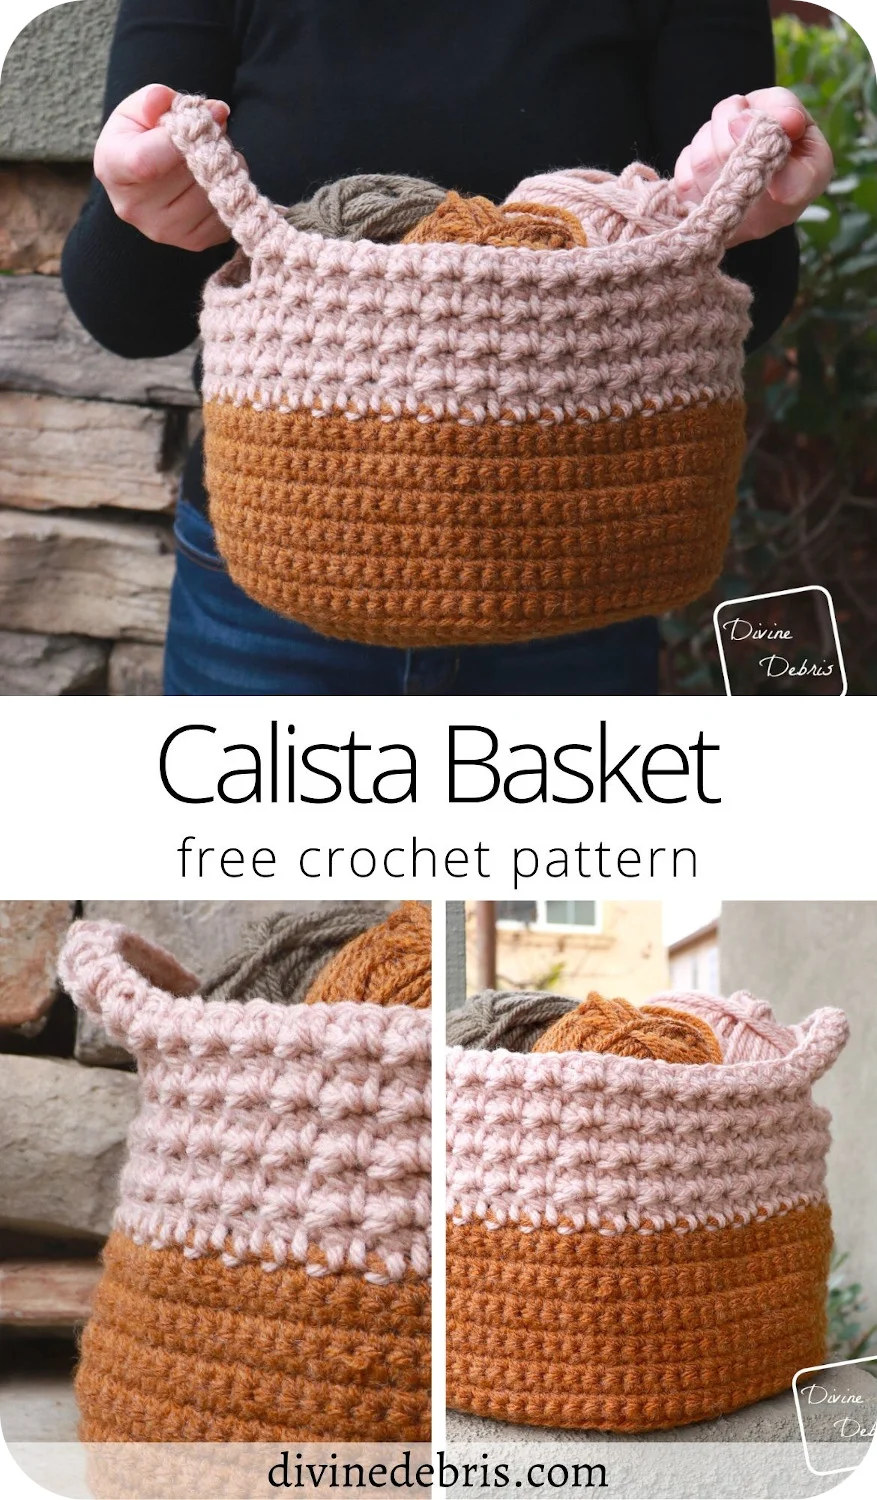 Free Berry Stitch Baskets Crochet Pattern by Divine Debris